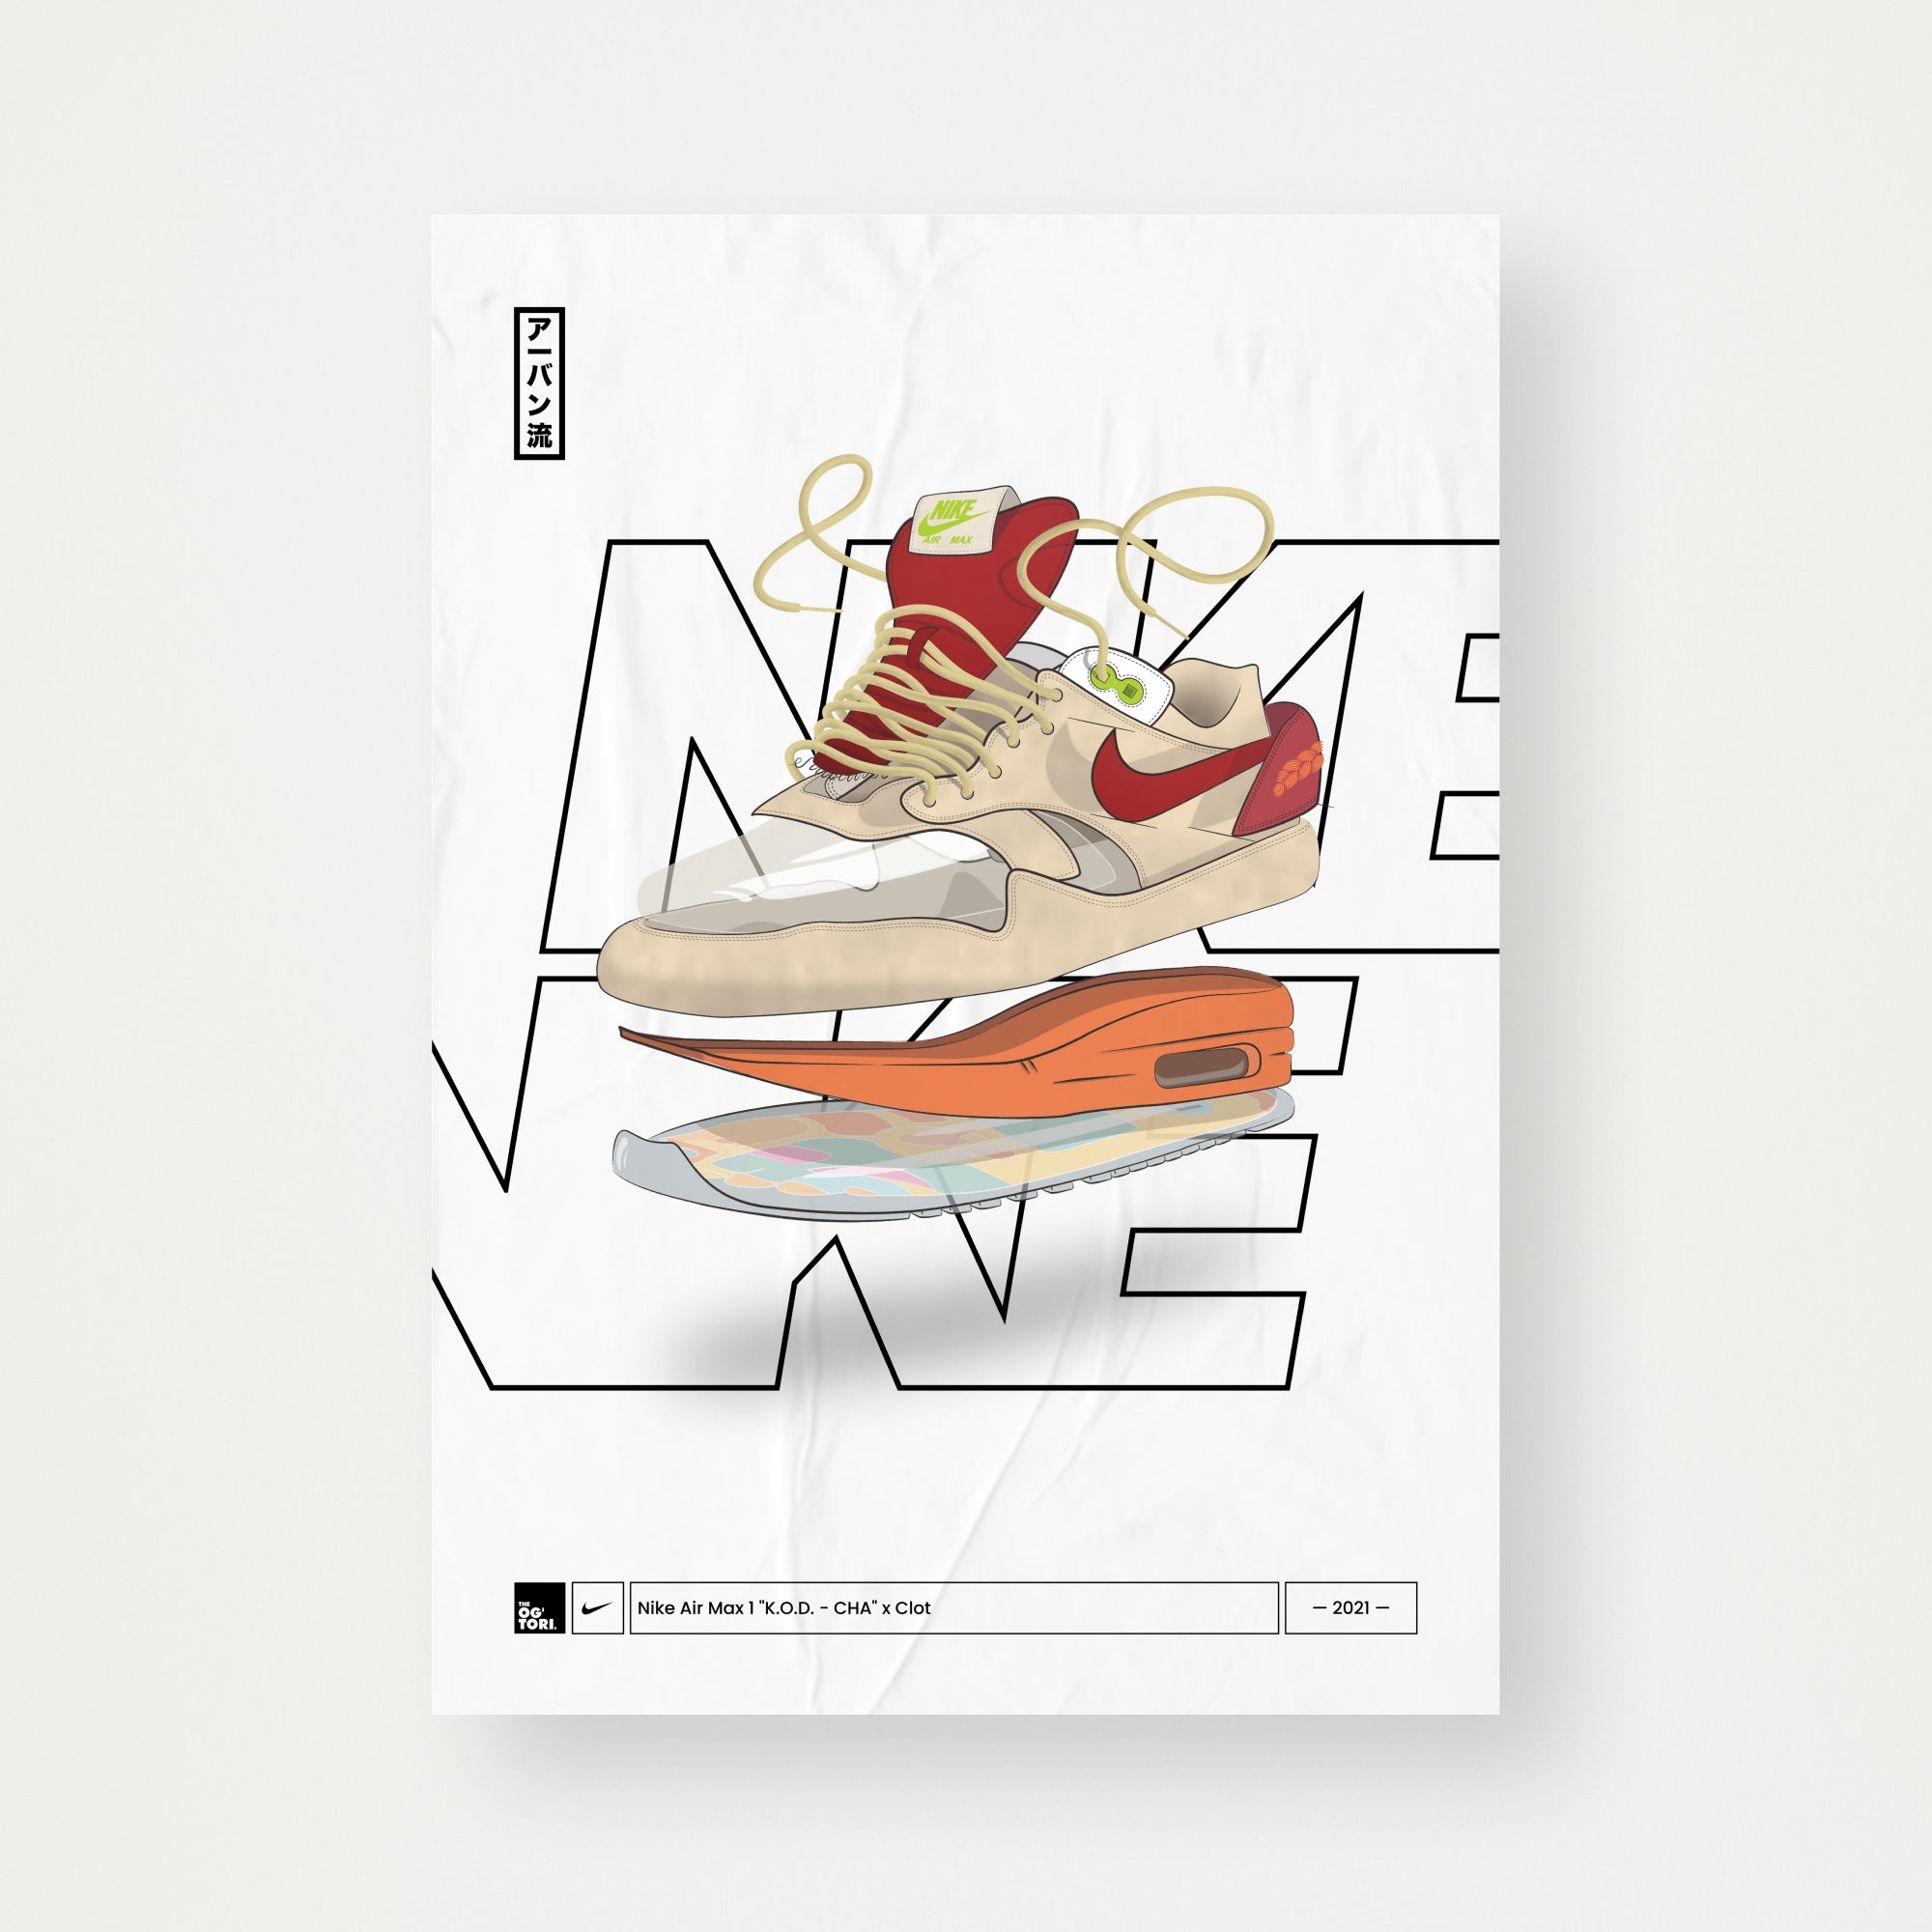 Nike Air Max Kod Cha x Clot – Poster – The OGTori